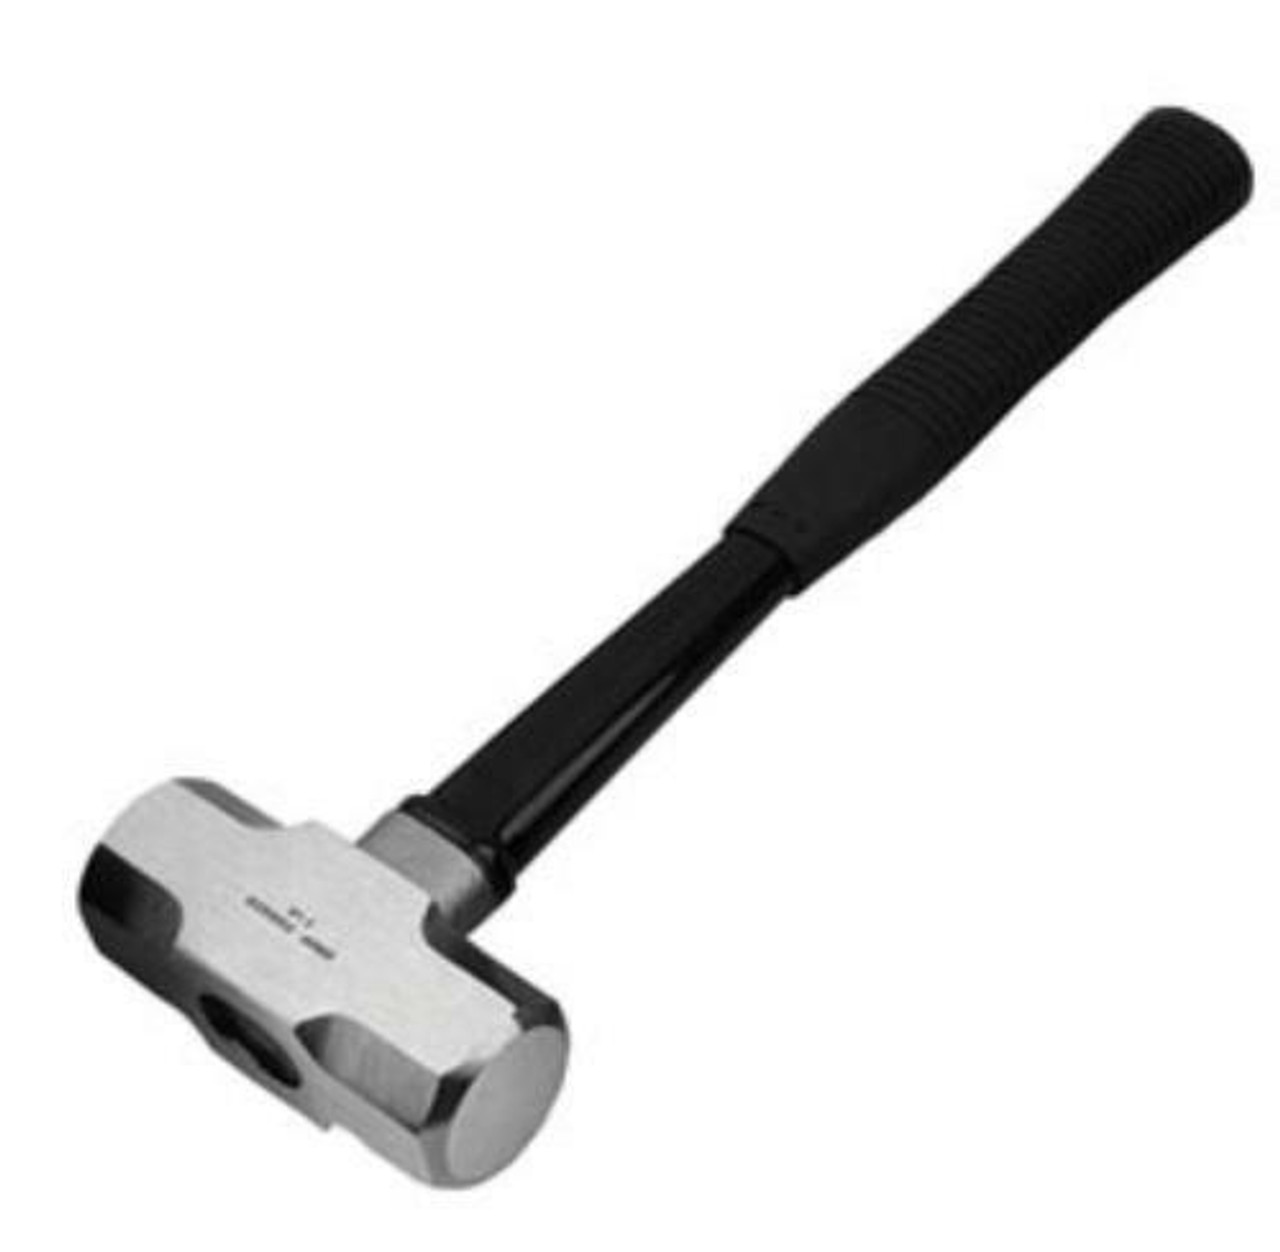 Hammer with Fiberglass Handle